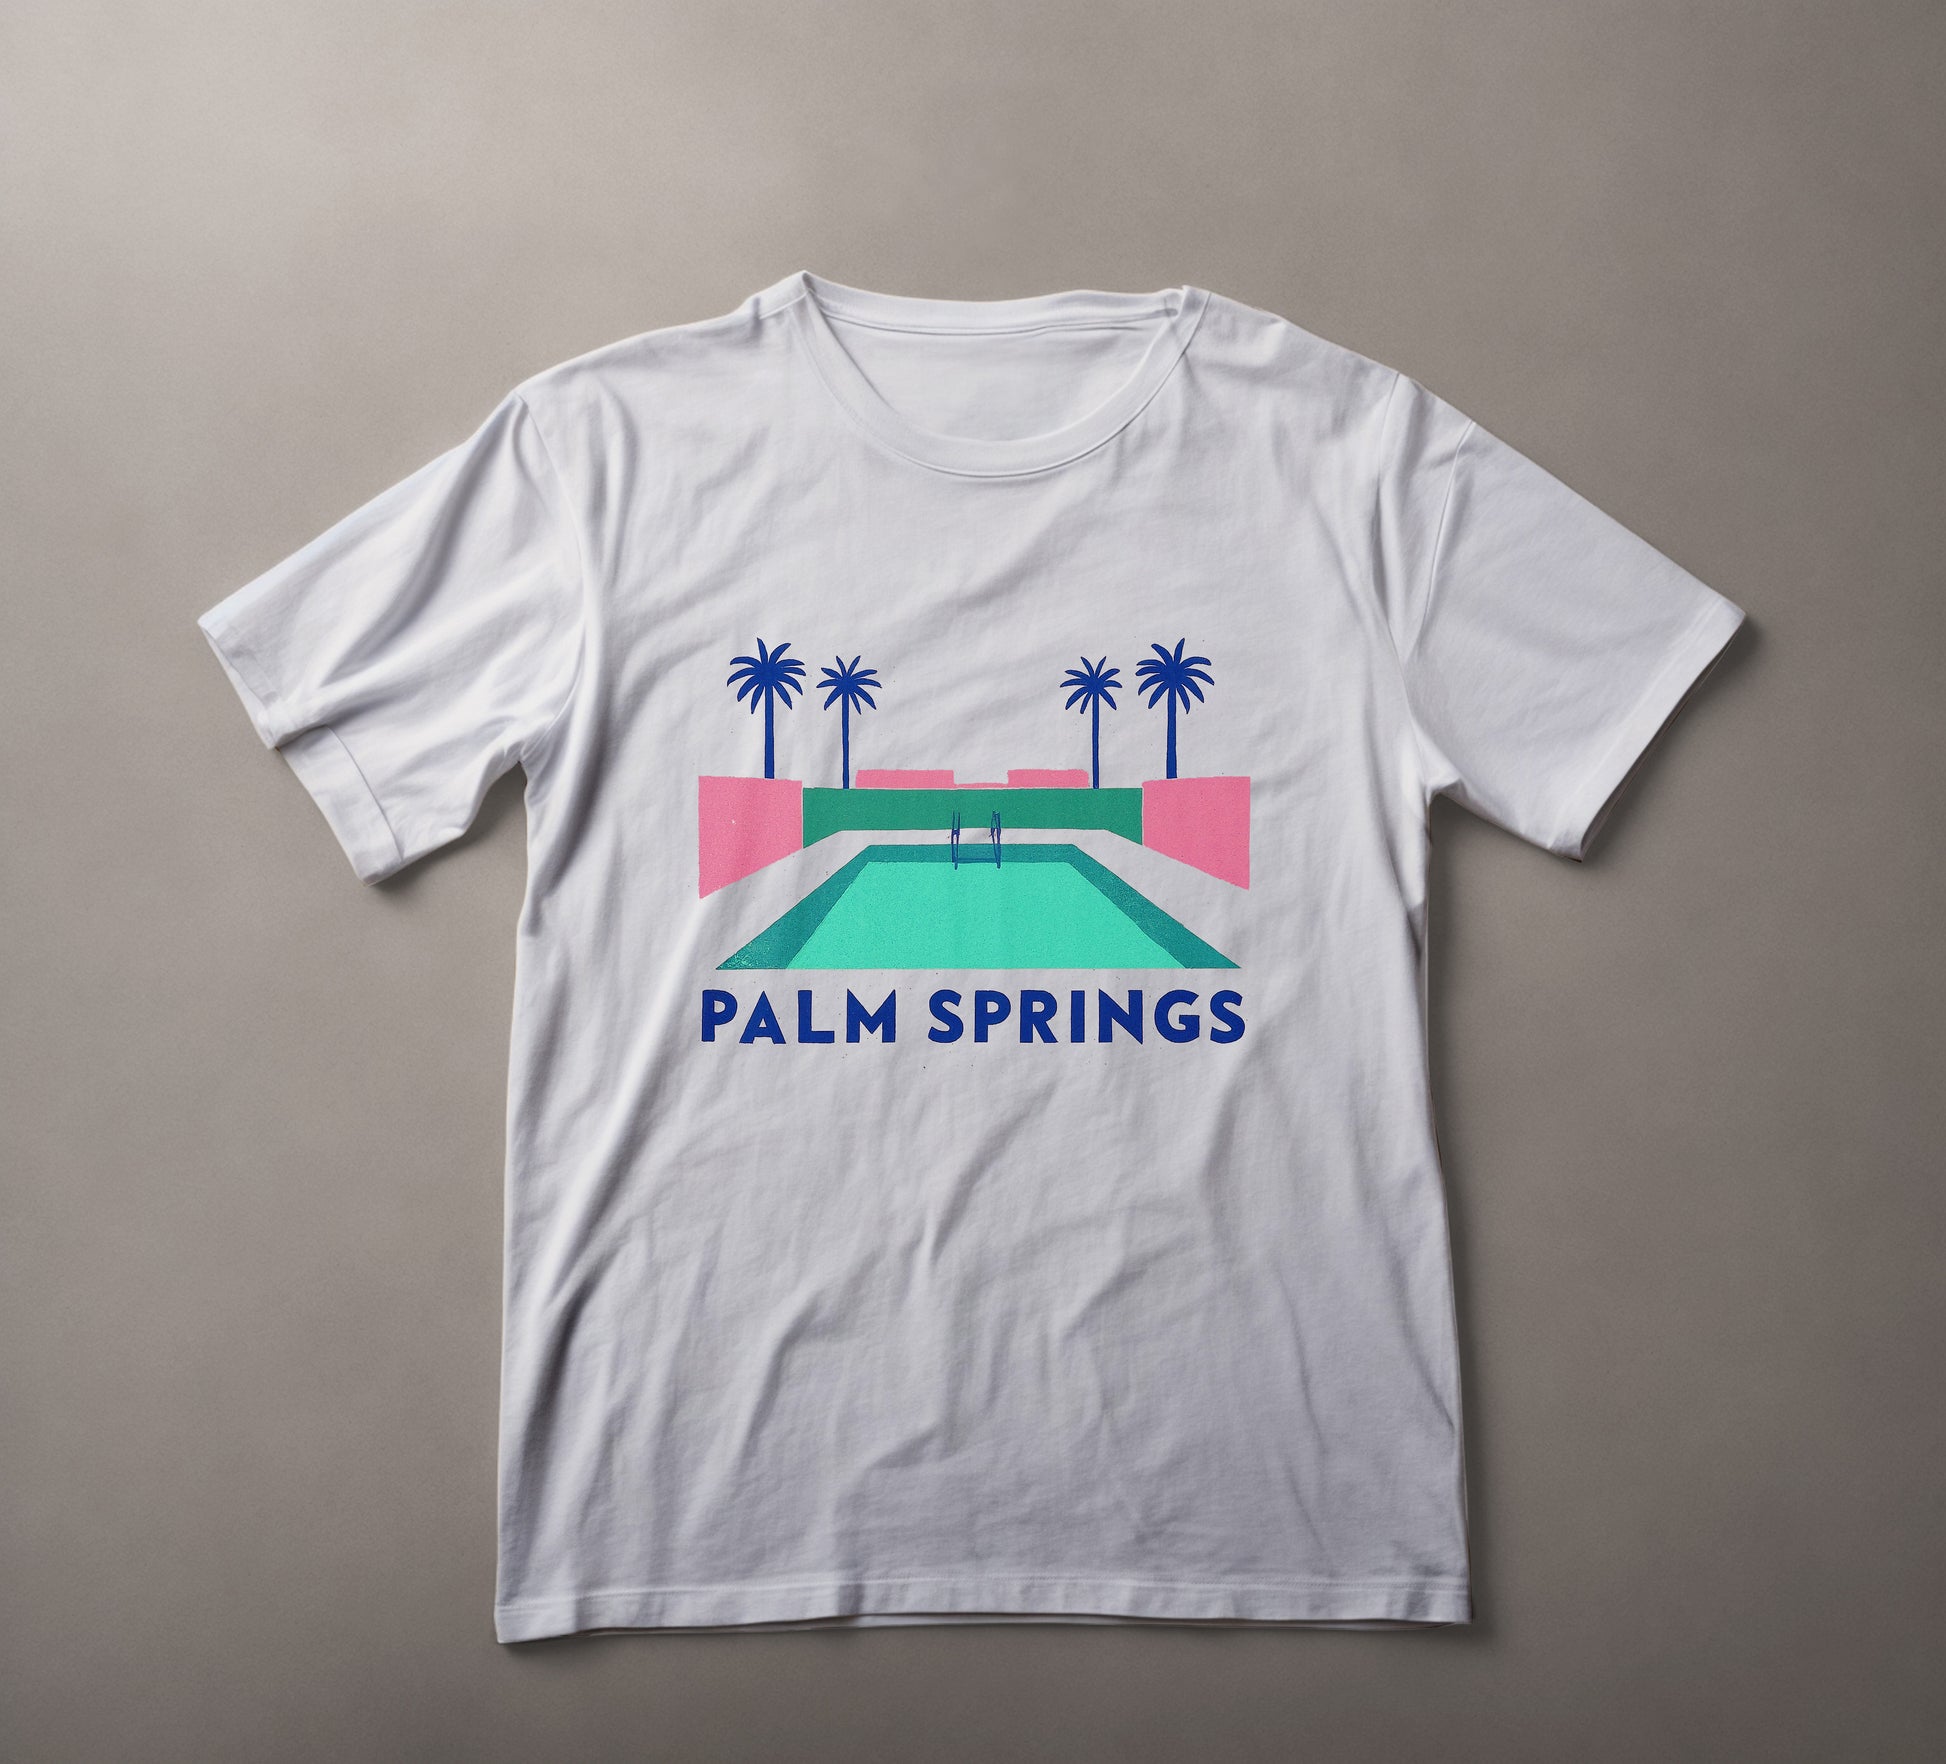 Palm Springs t-shirt, retro pool design, summer vibes clothing, palm tree graphic, resort wear, vacation tee, minimalist design shirt, pastel color top, leisure fashion, desert oasis apparel